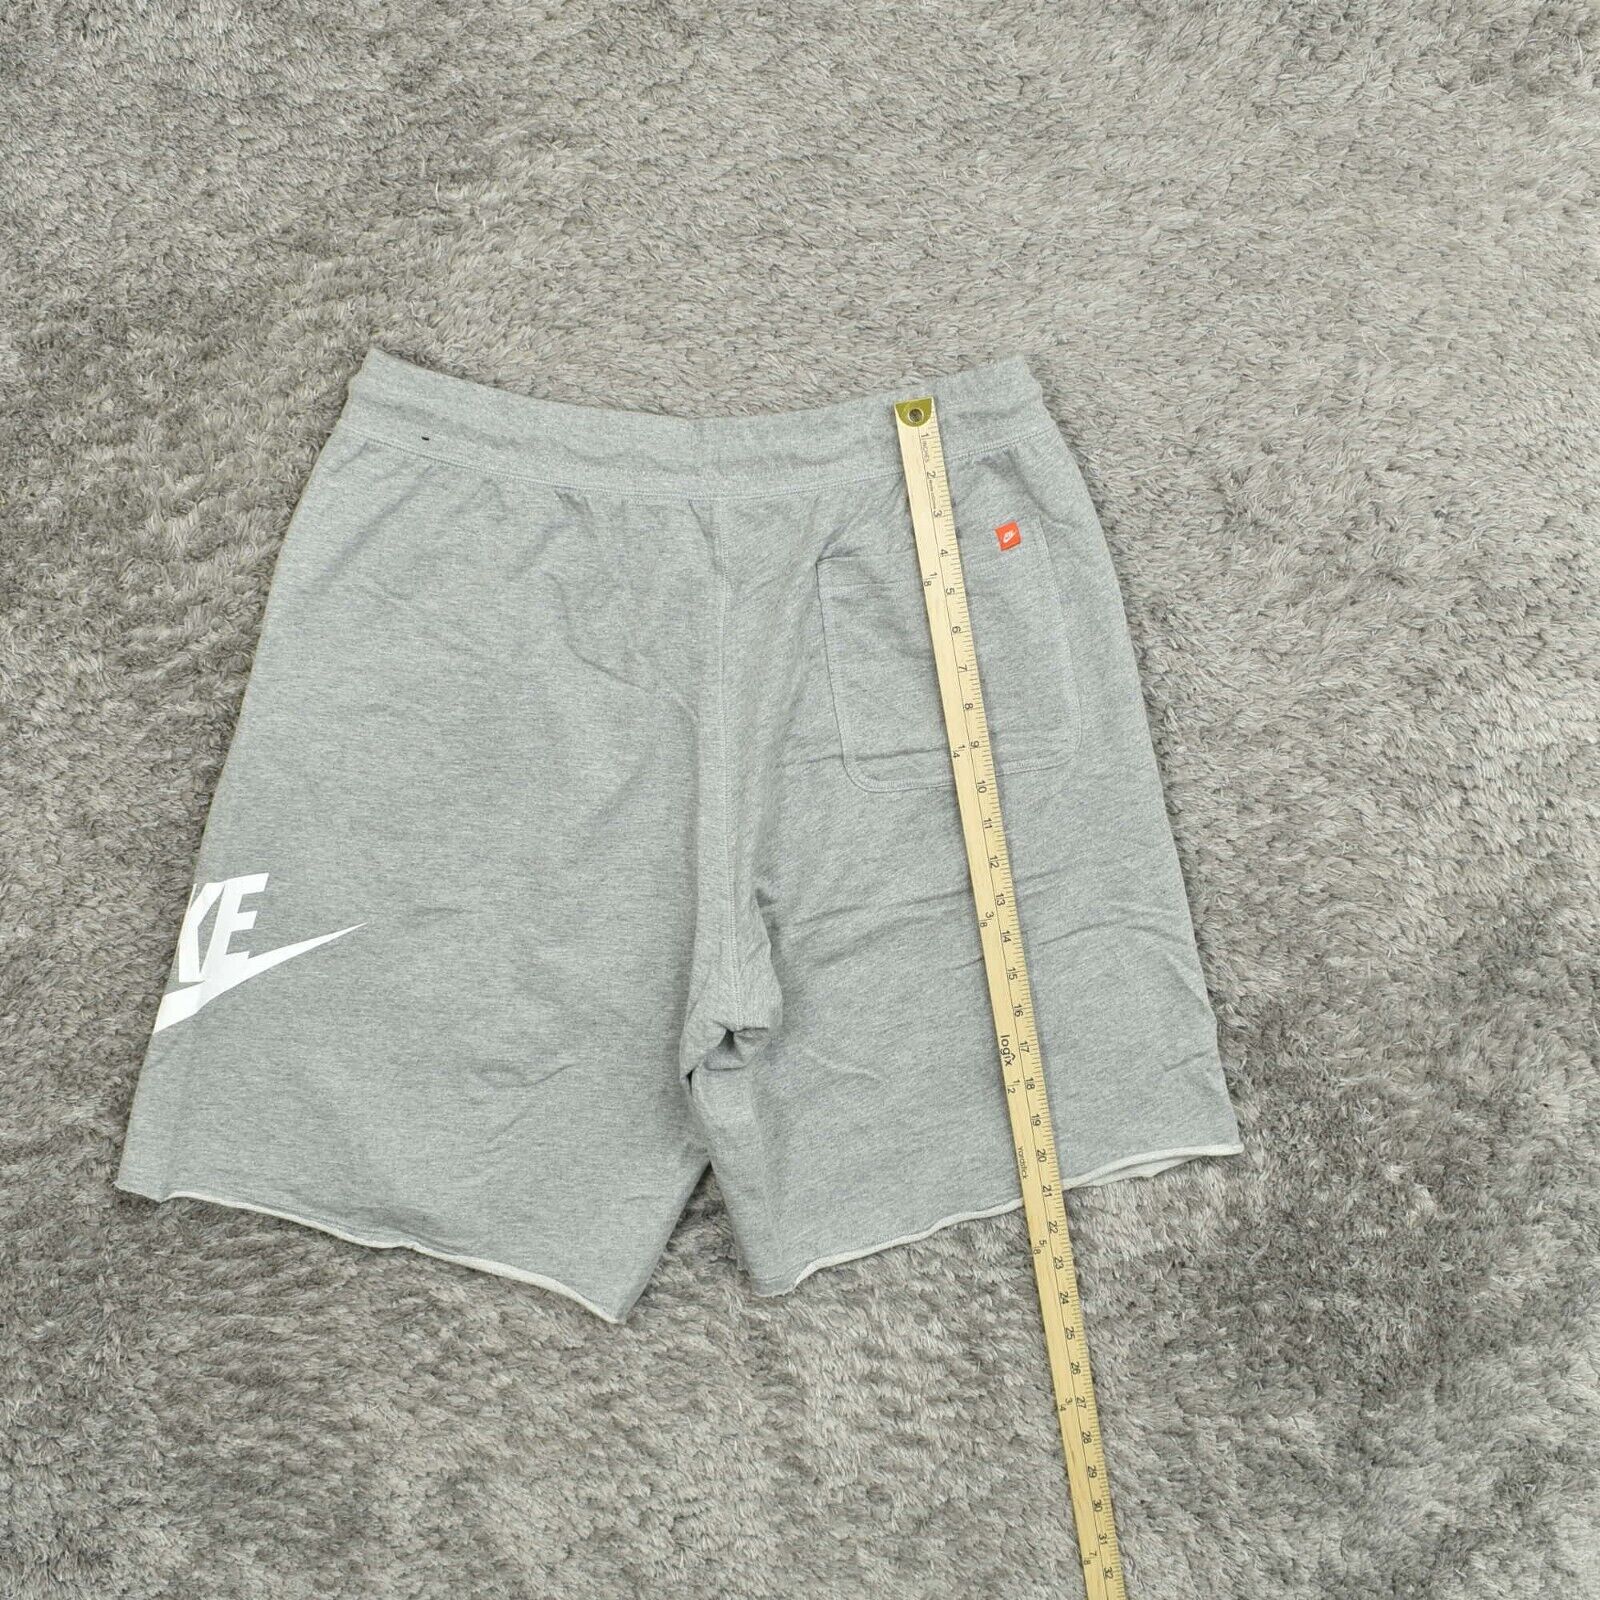 Nike Men's Size 2XL Sweat Shorts Soft Gray Cotton - image 4